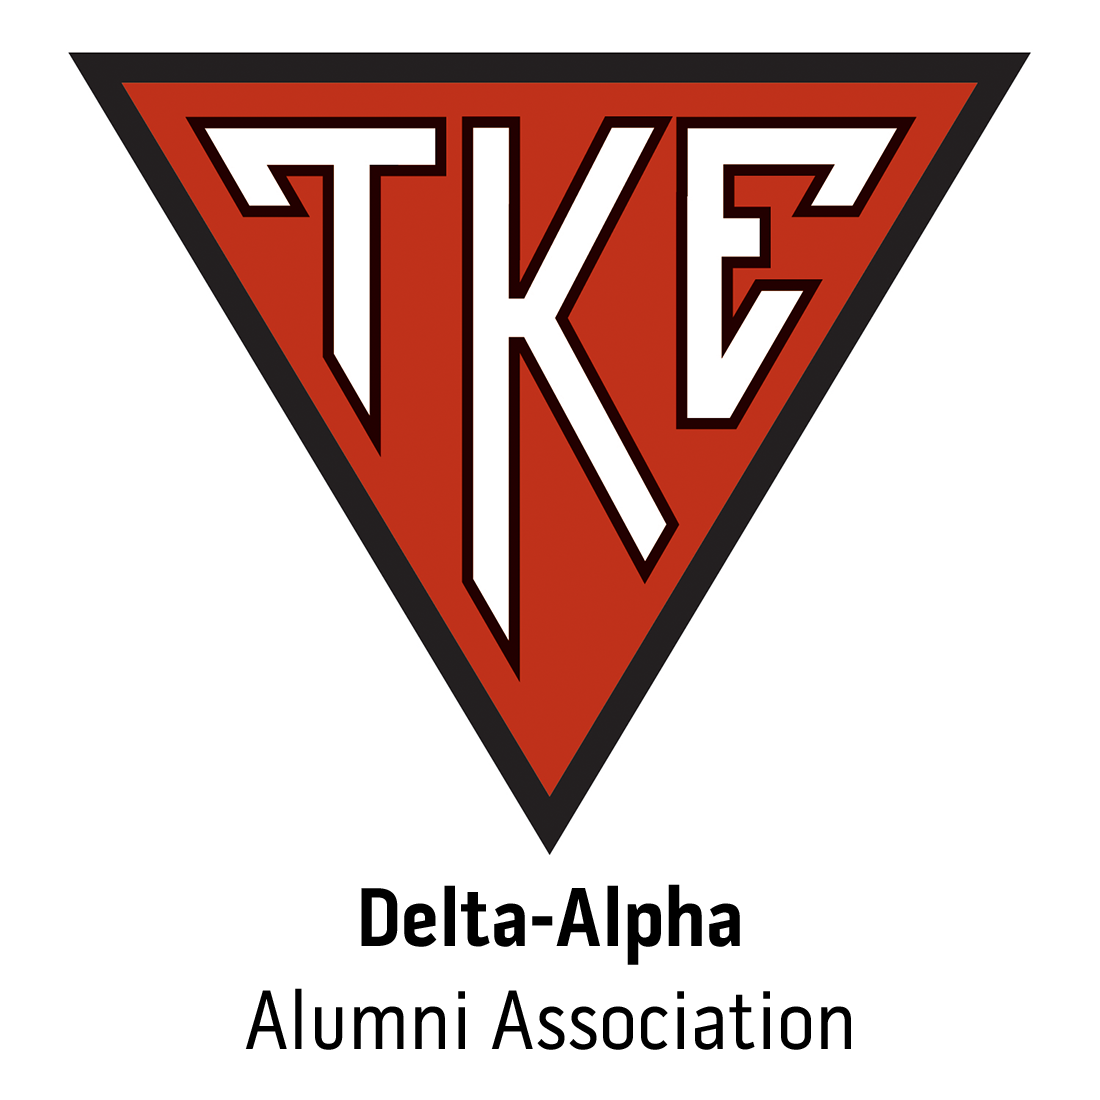 Delta-Alpha Alumni Association at Western Michigan University